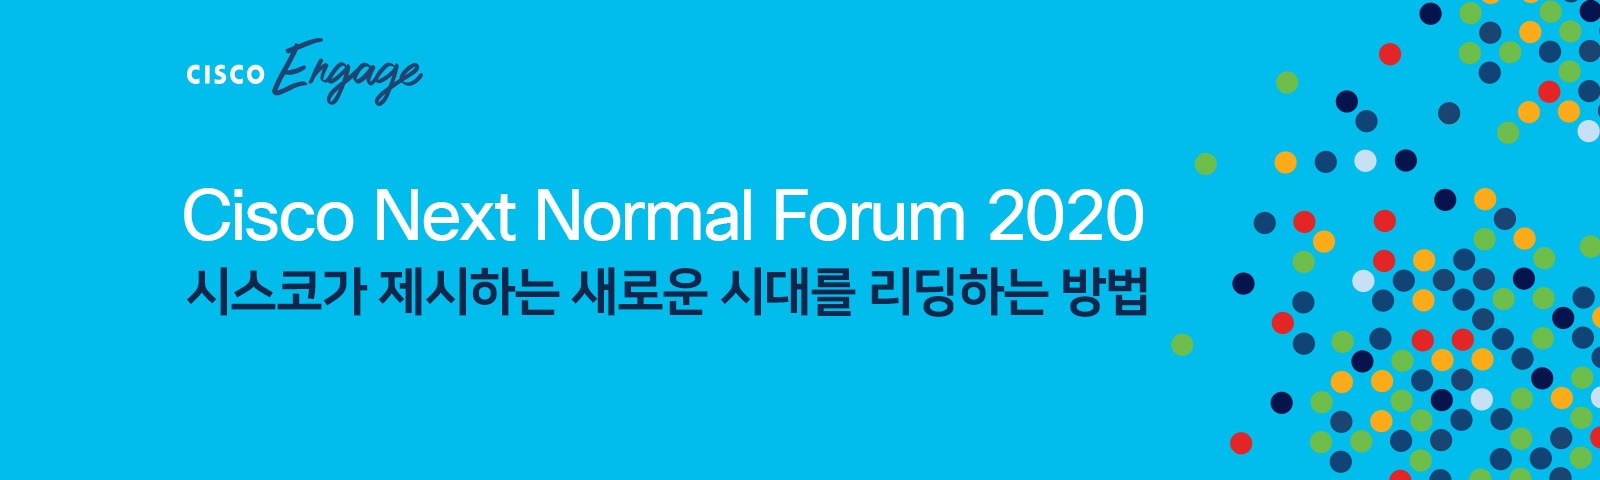 Cisco Next Normal Forum 2020